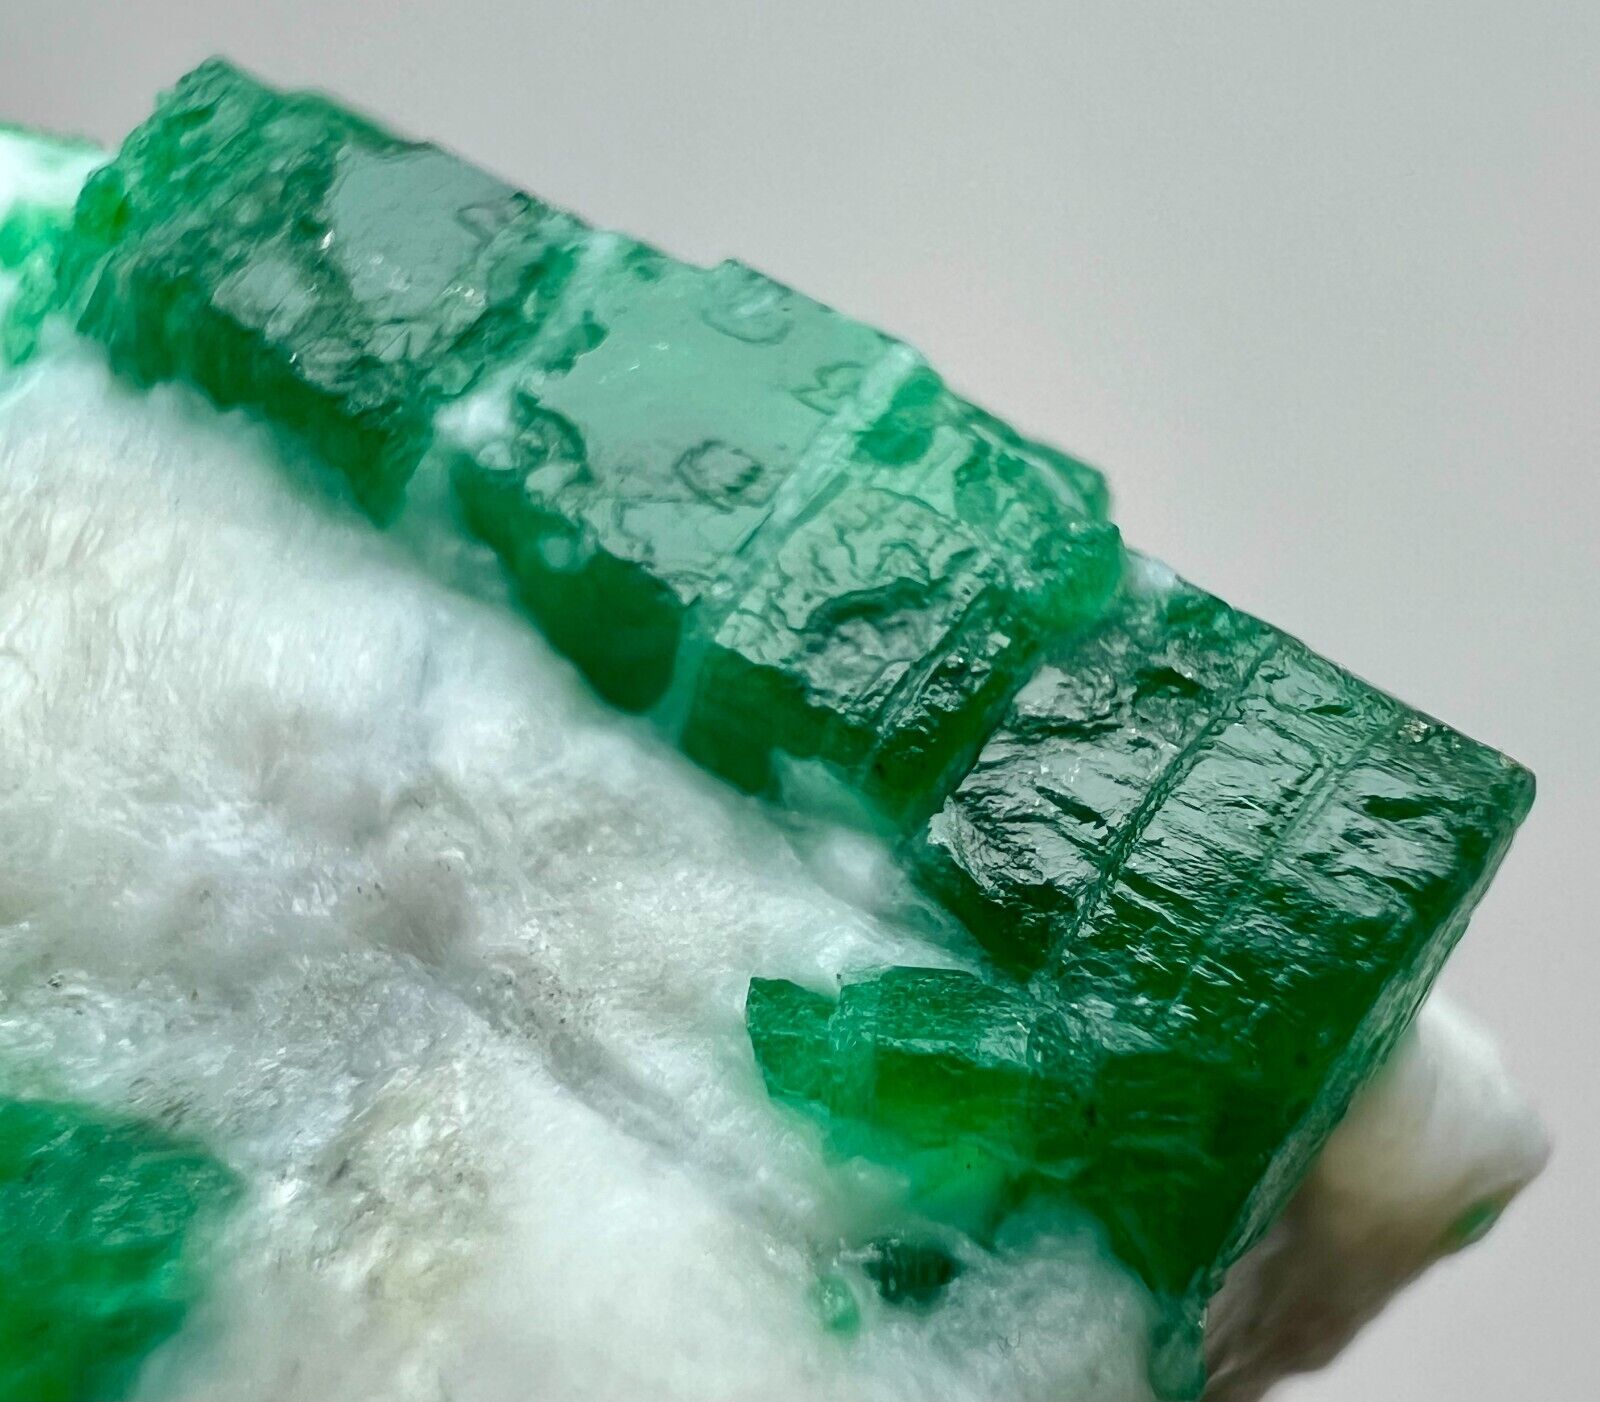 187 Carats Well Terminated Highest Green Swat Emerald Crystals On Matrix @PAK